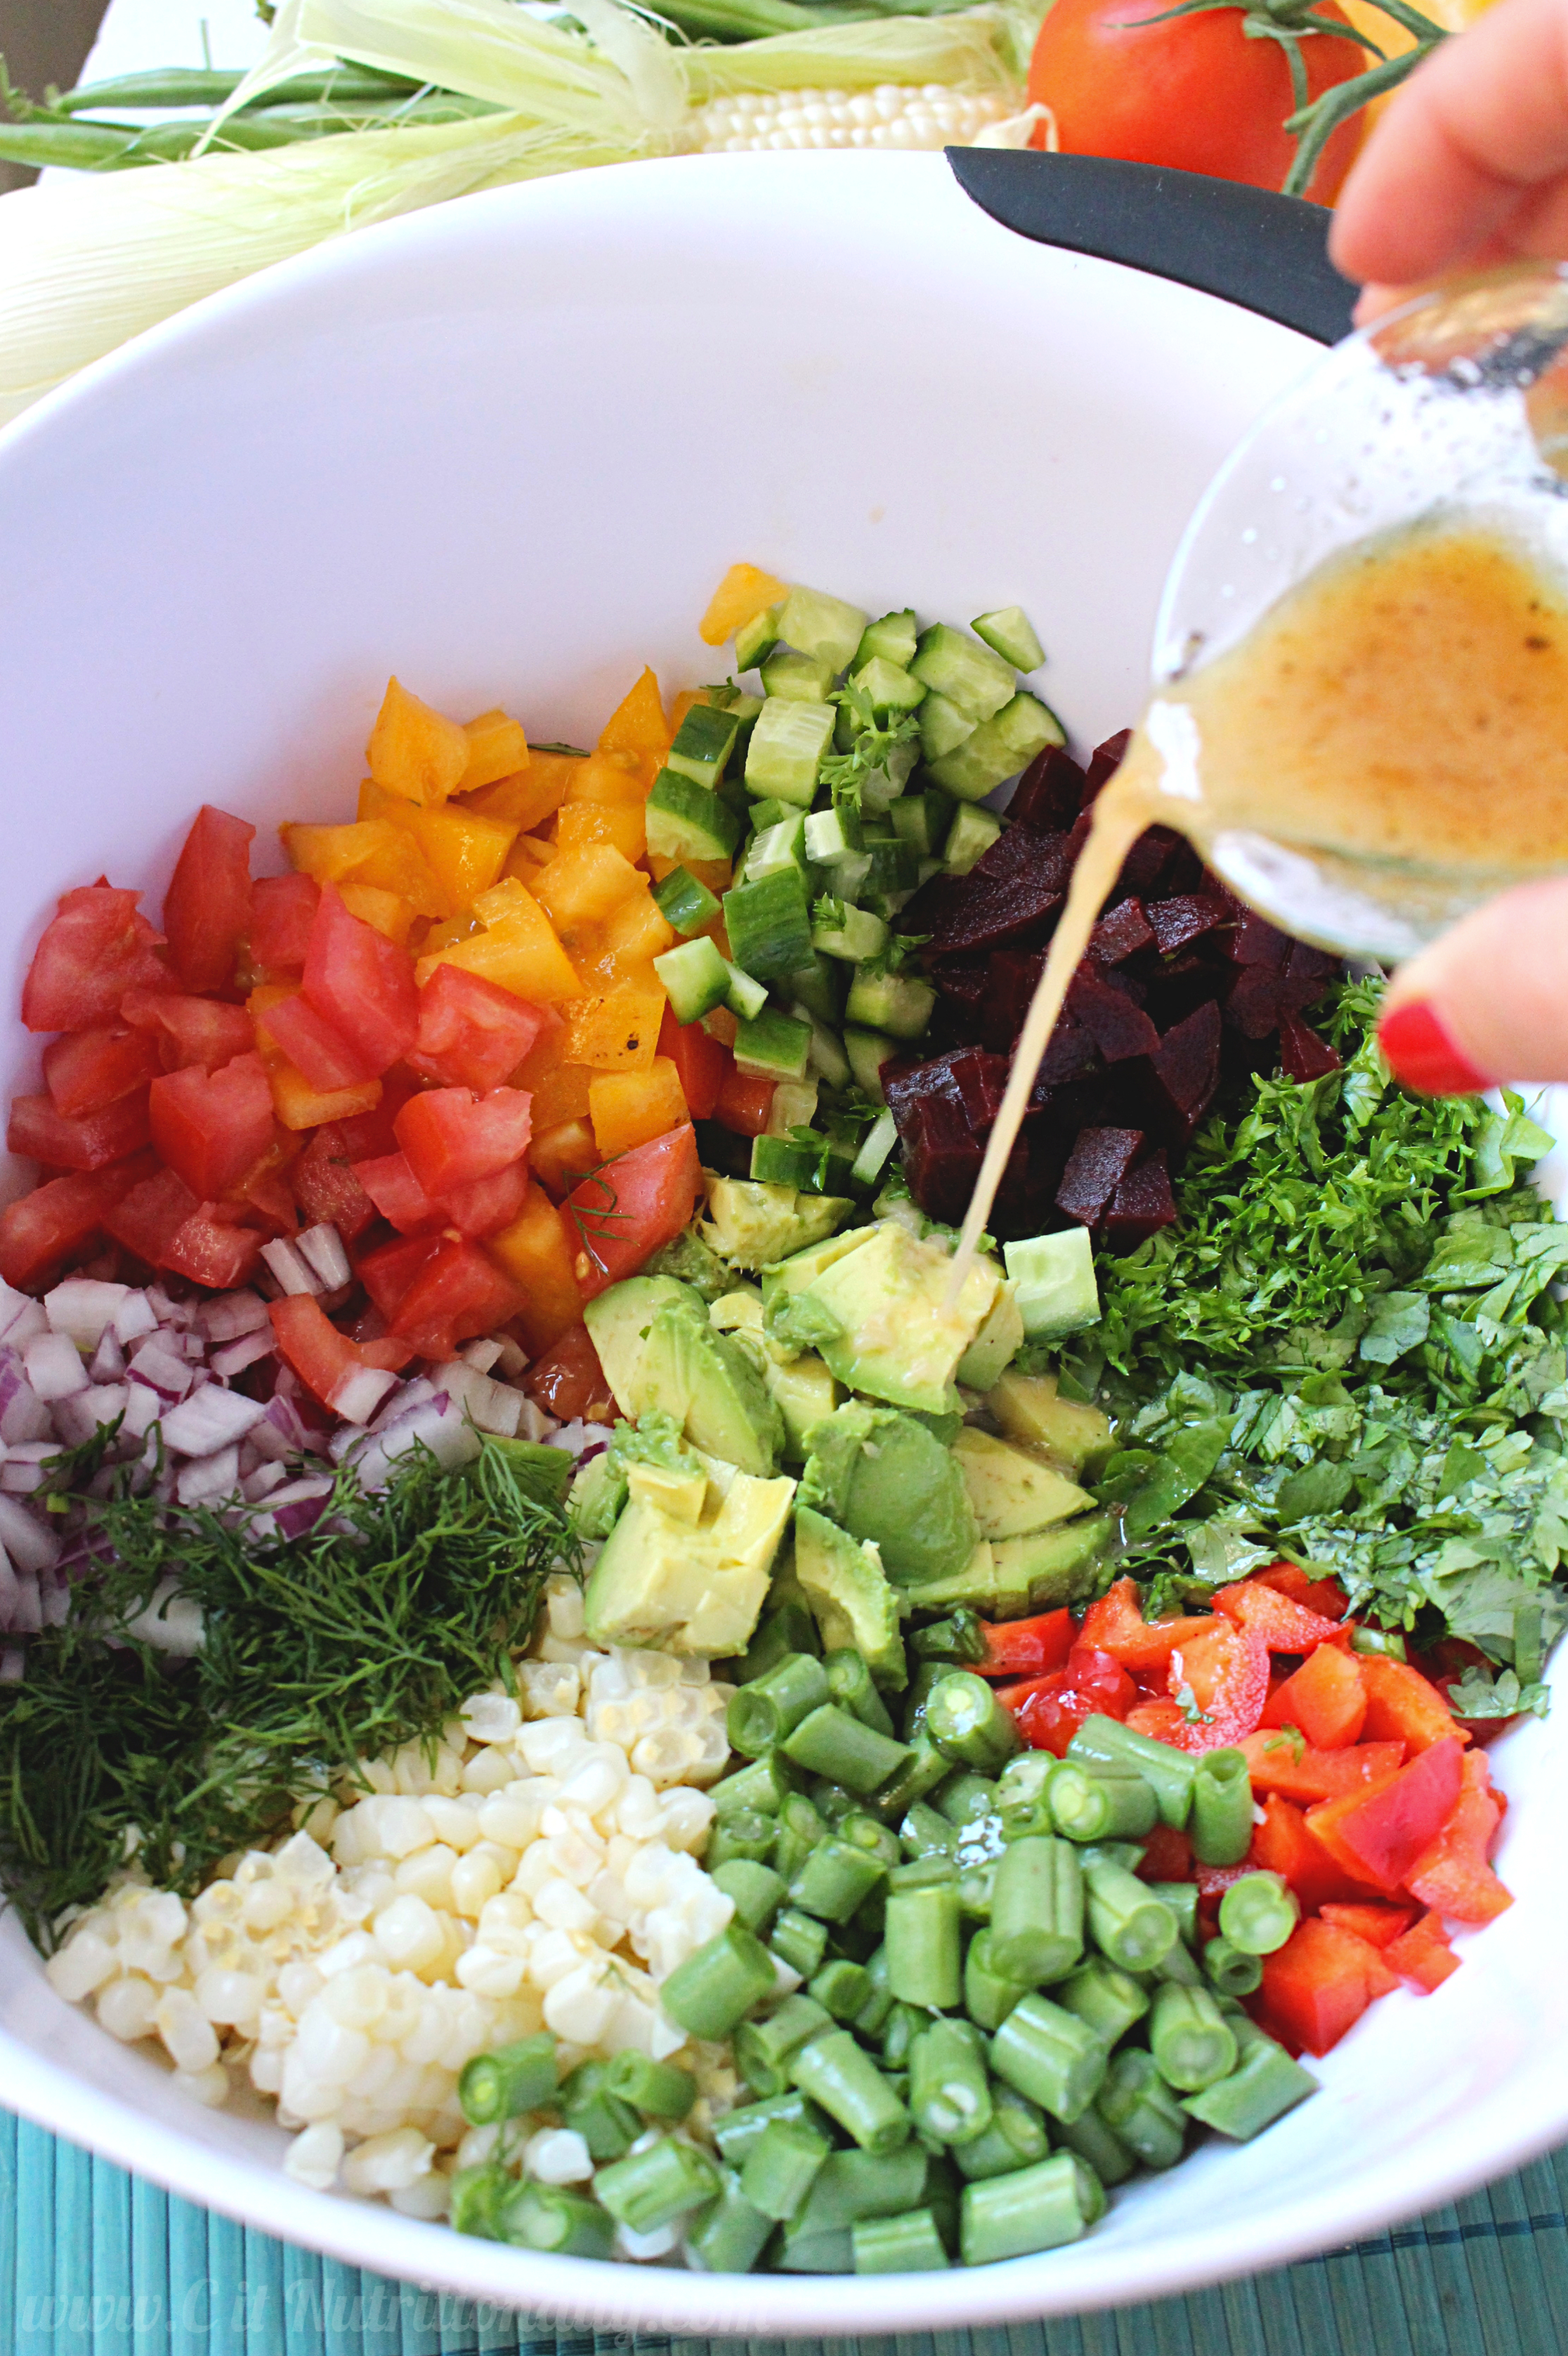 http://chelseyamernutrition.com/wp-content/uploads/2015/08/Farmers-Market-Chopped-Summer-Salad-C-it-Nutritionally-6.jpg